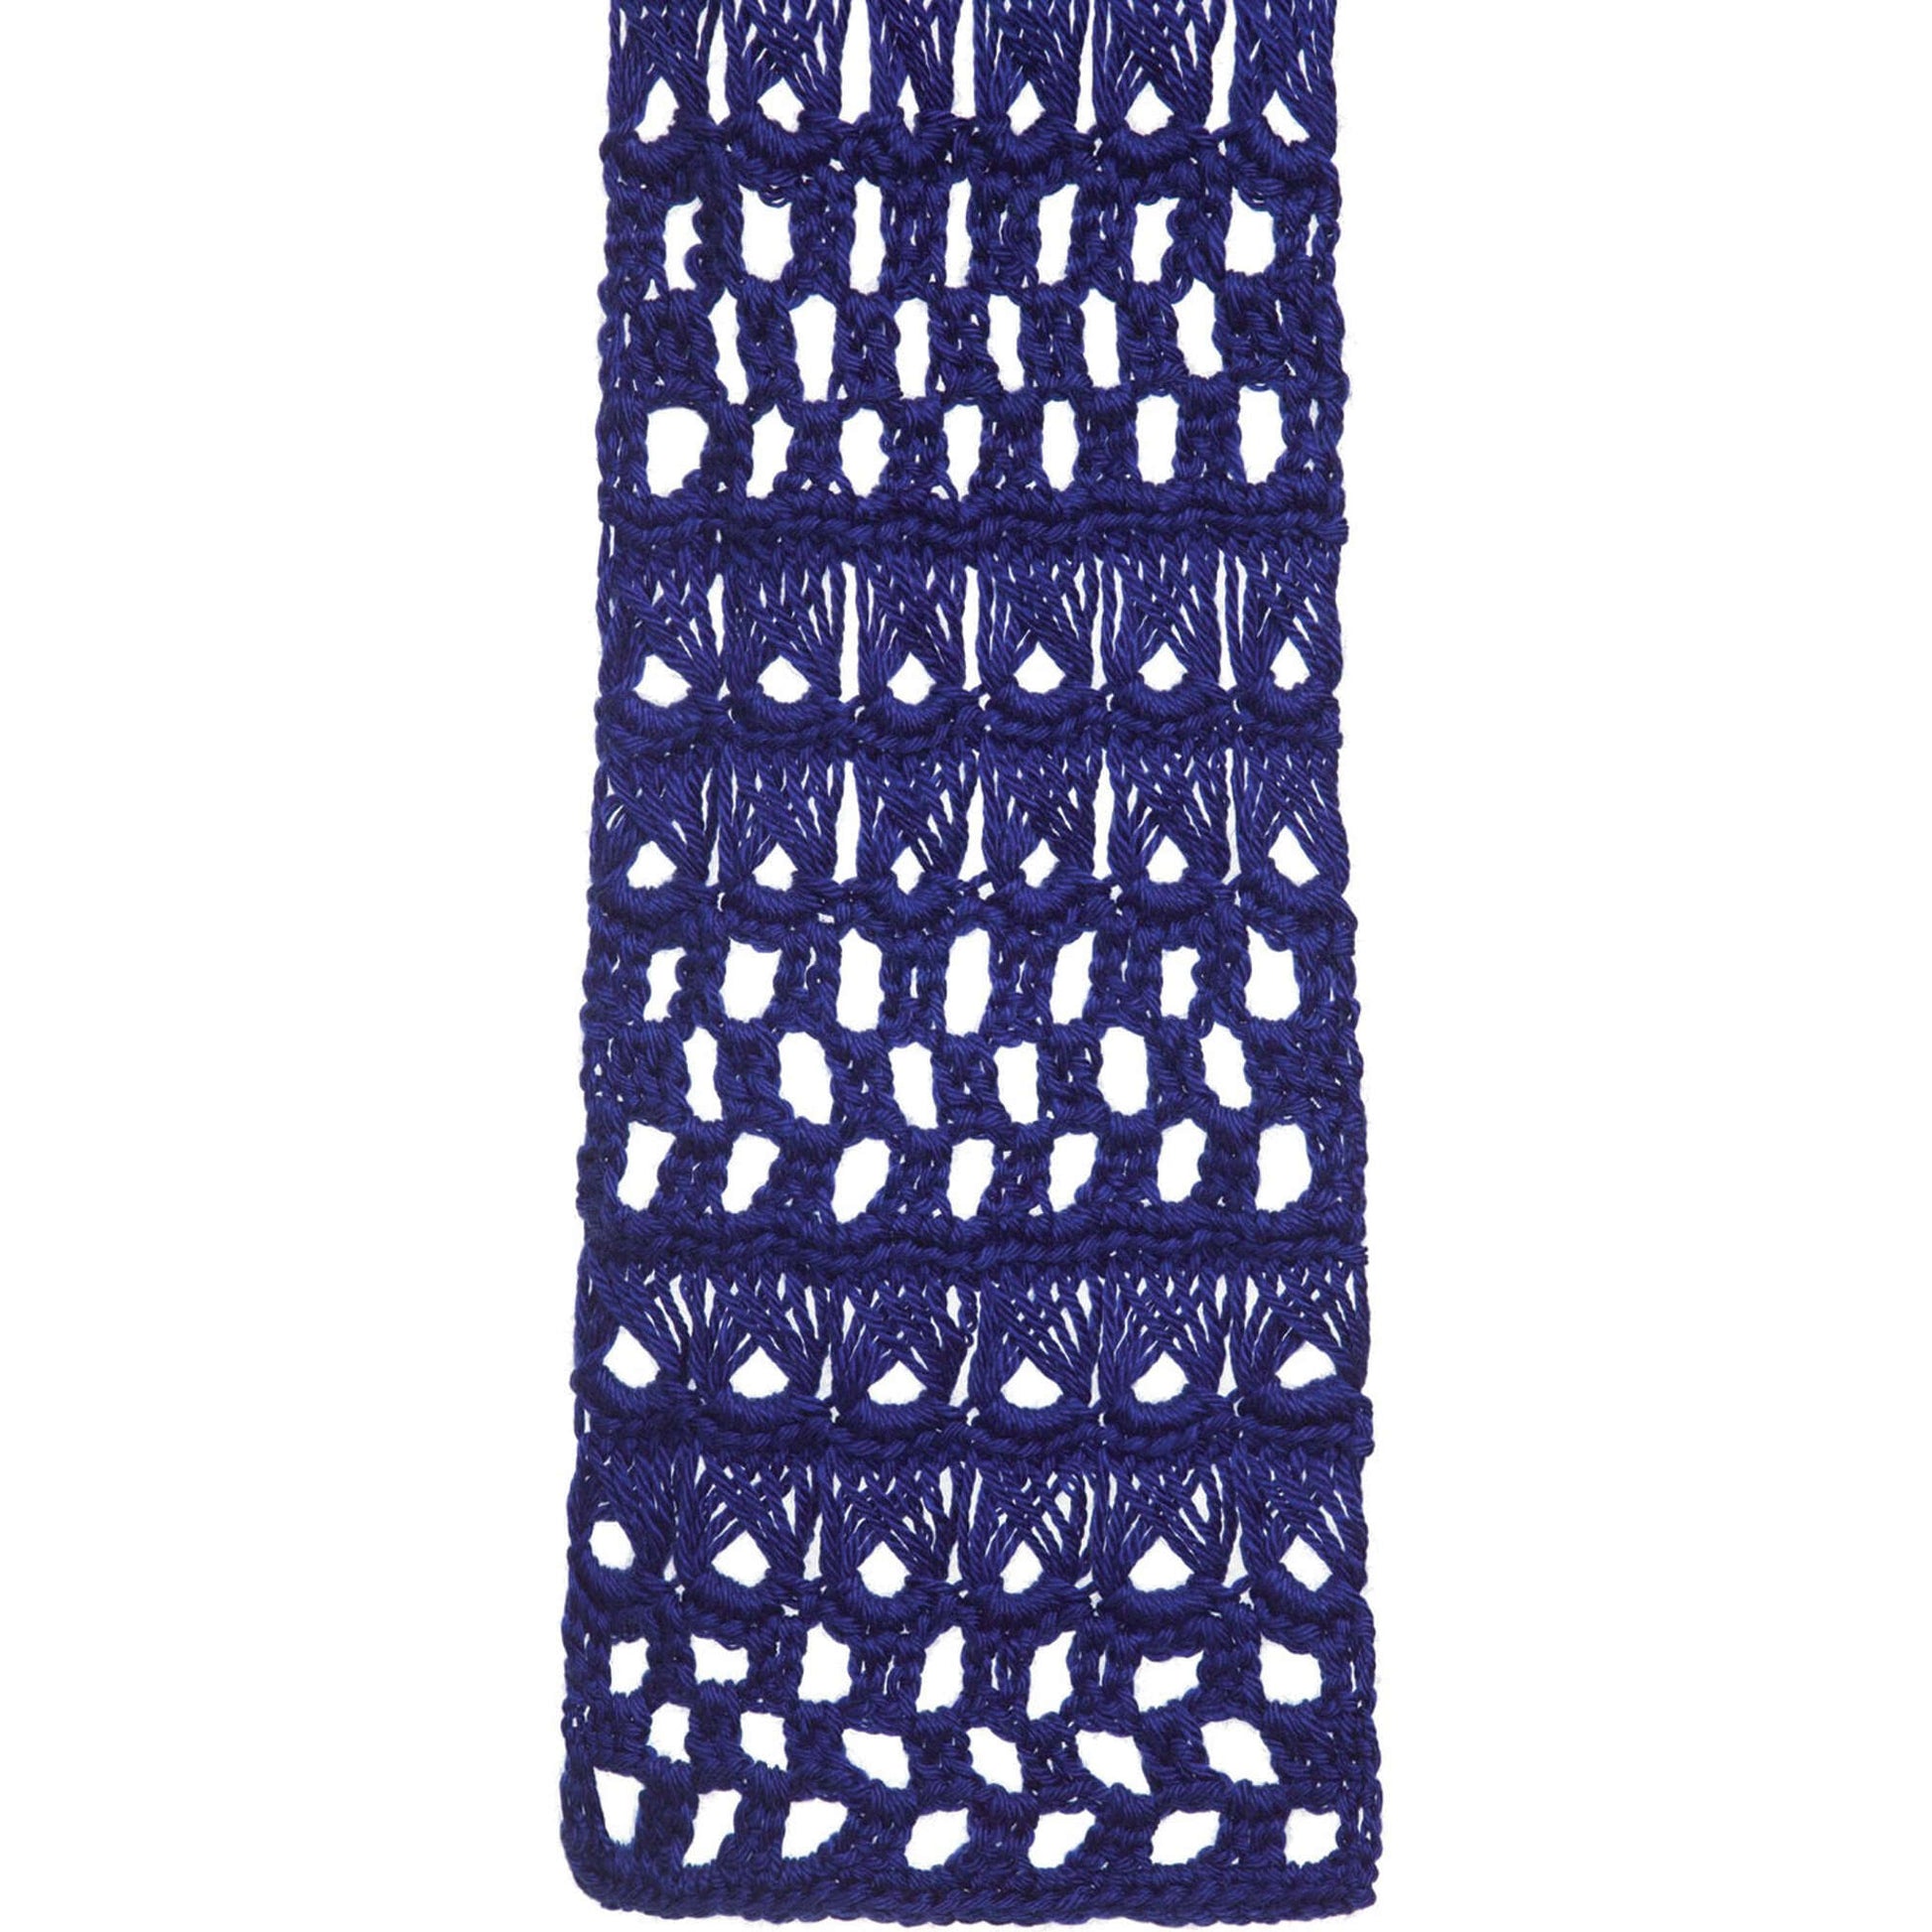 Free Caron Broomstick Lace Set Crochet Pattern